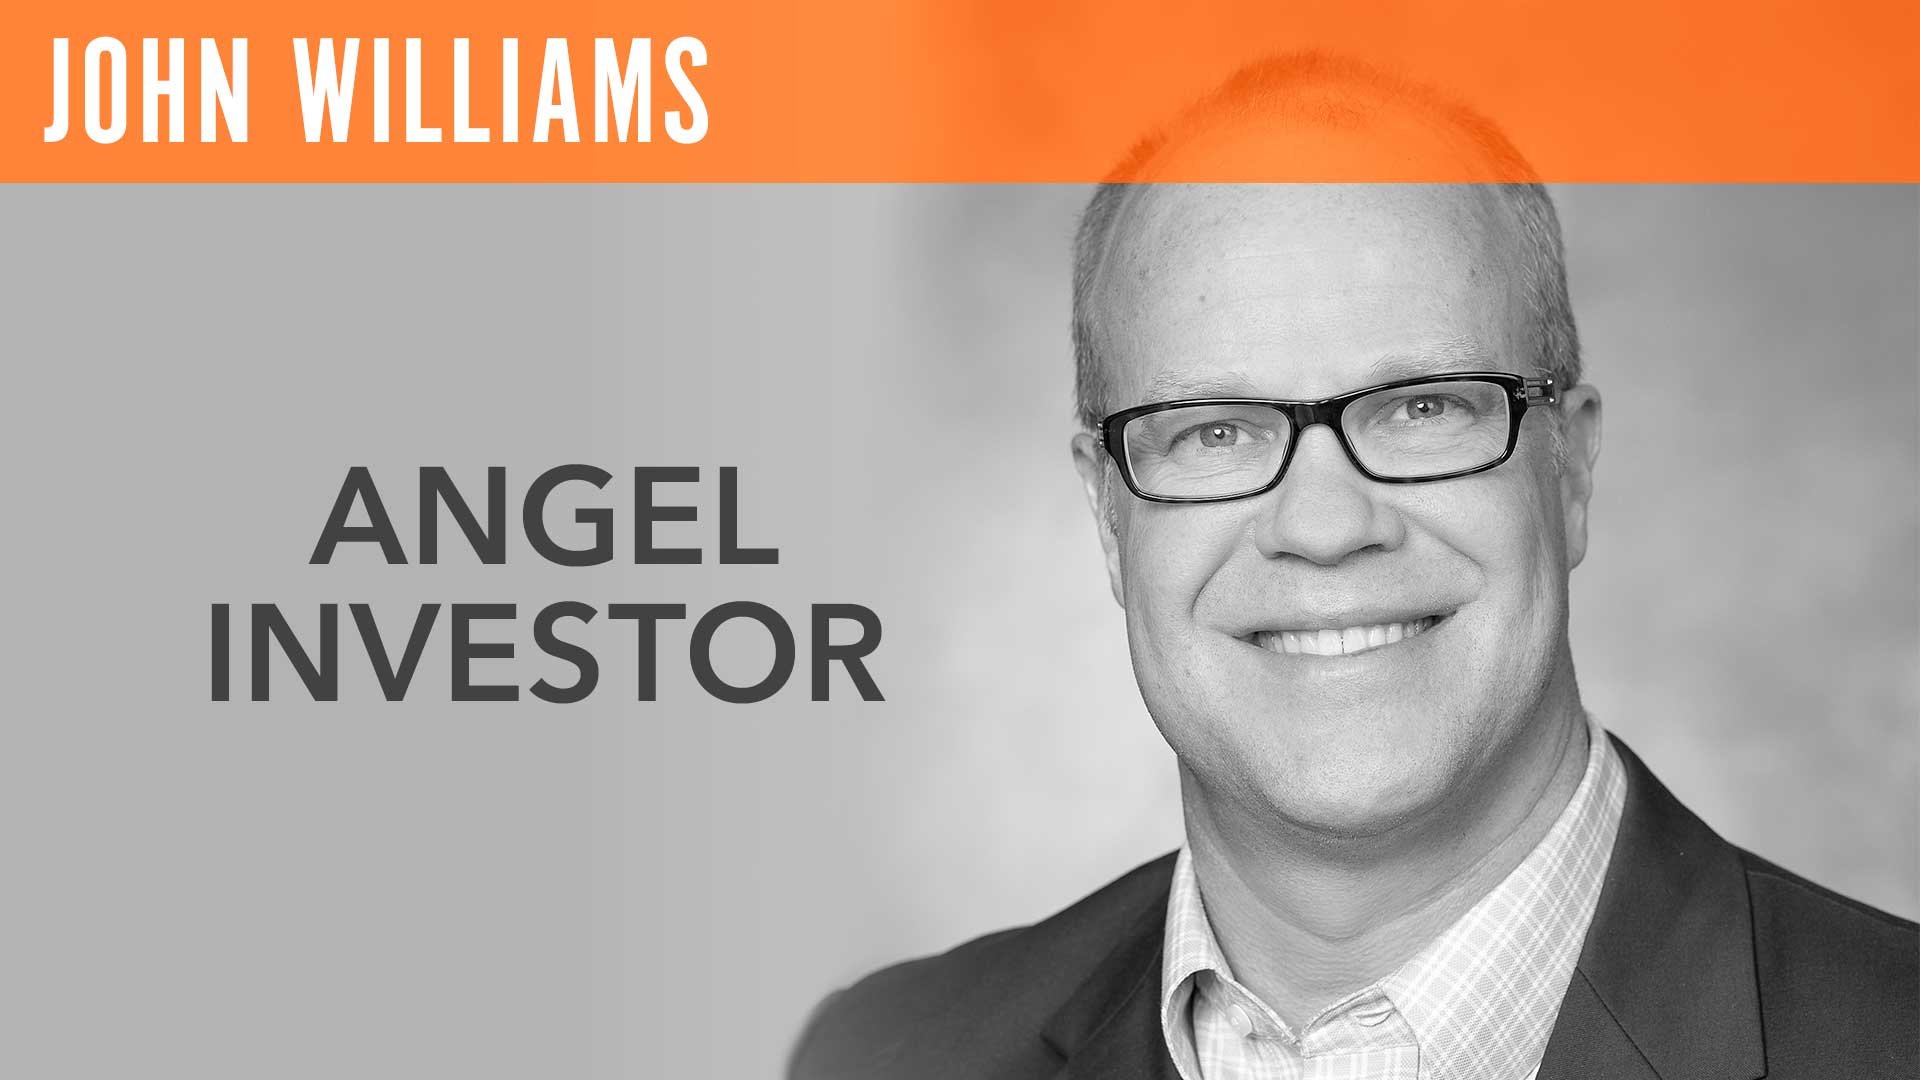 John Williams, "Angel Investor"